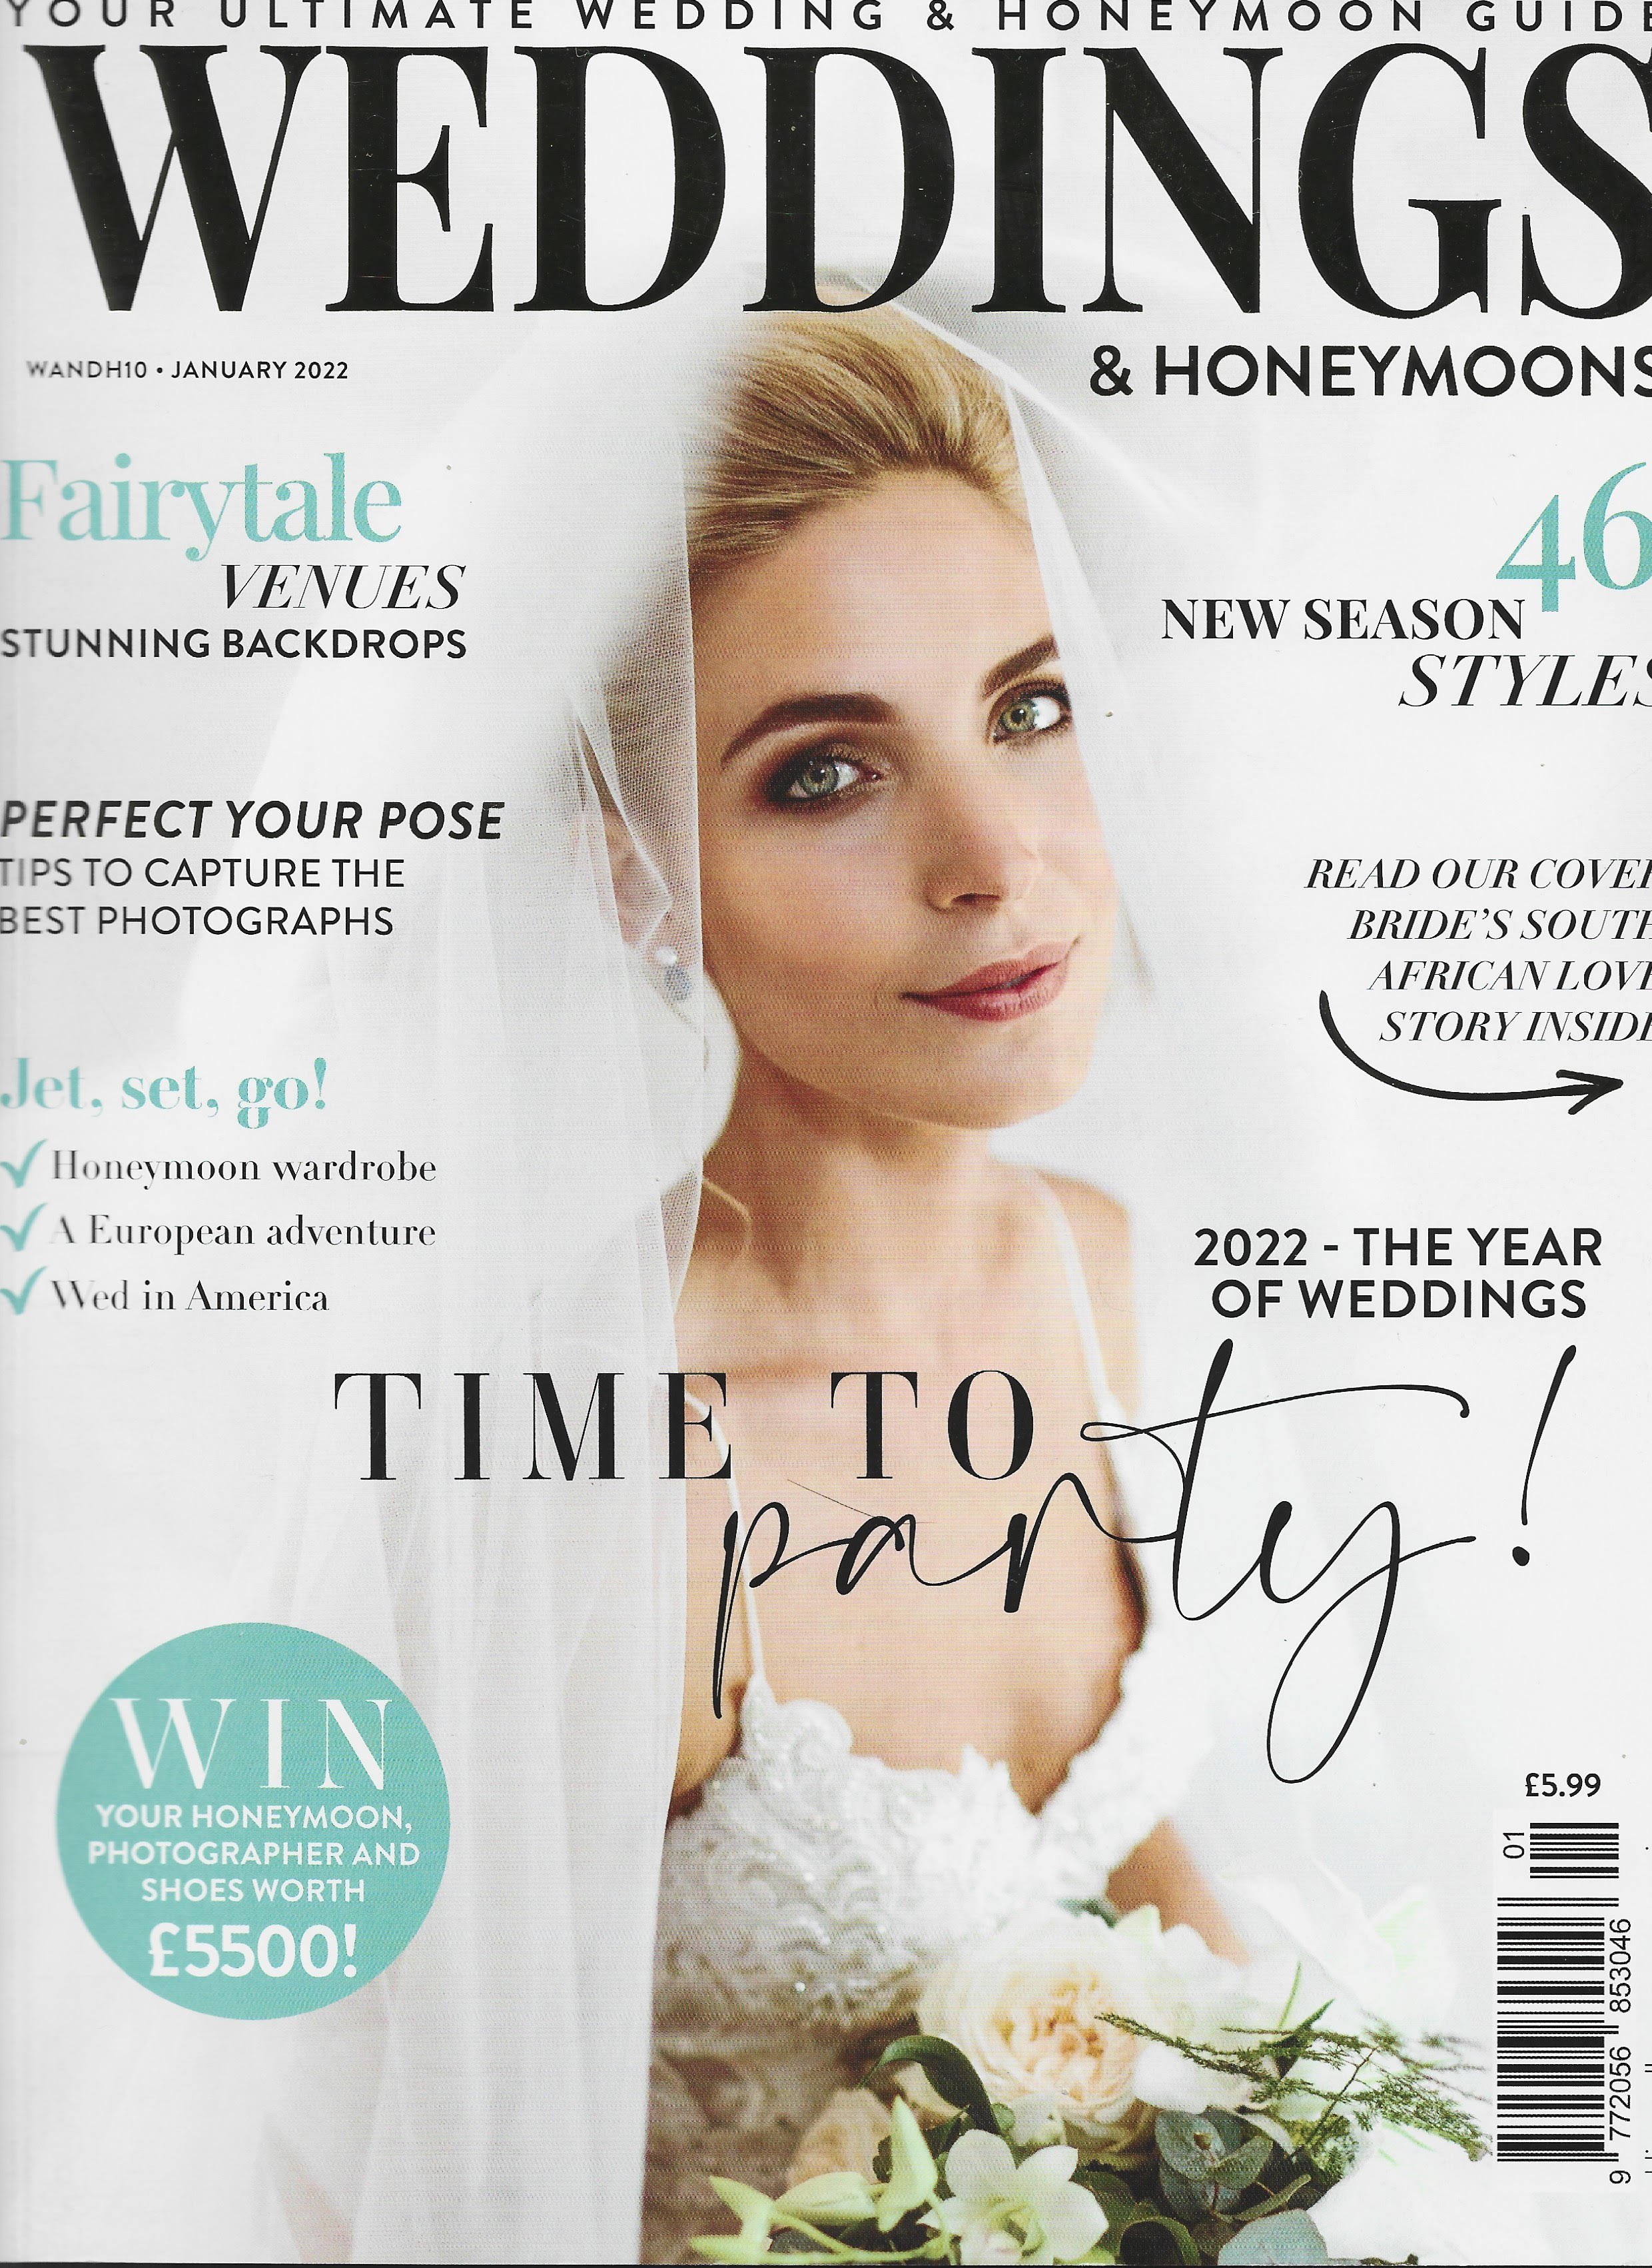 Weddings and Honeymoons Magazine, January 2022